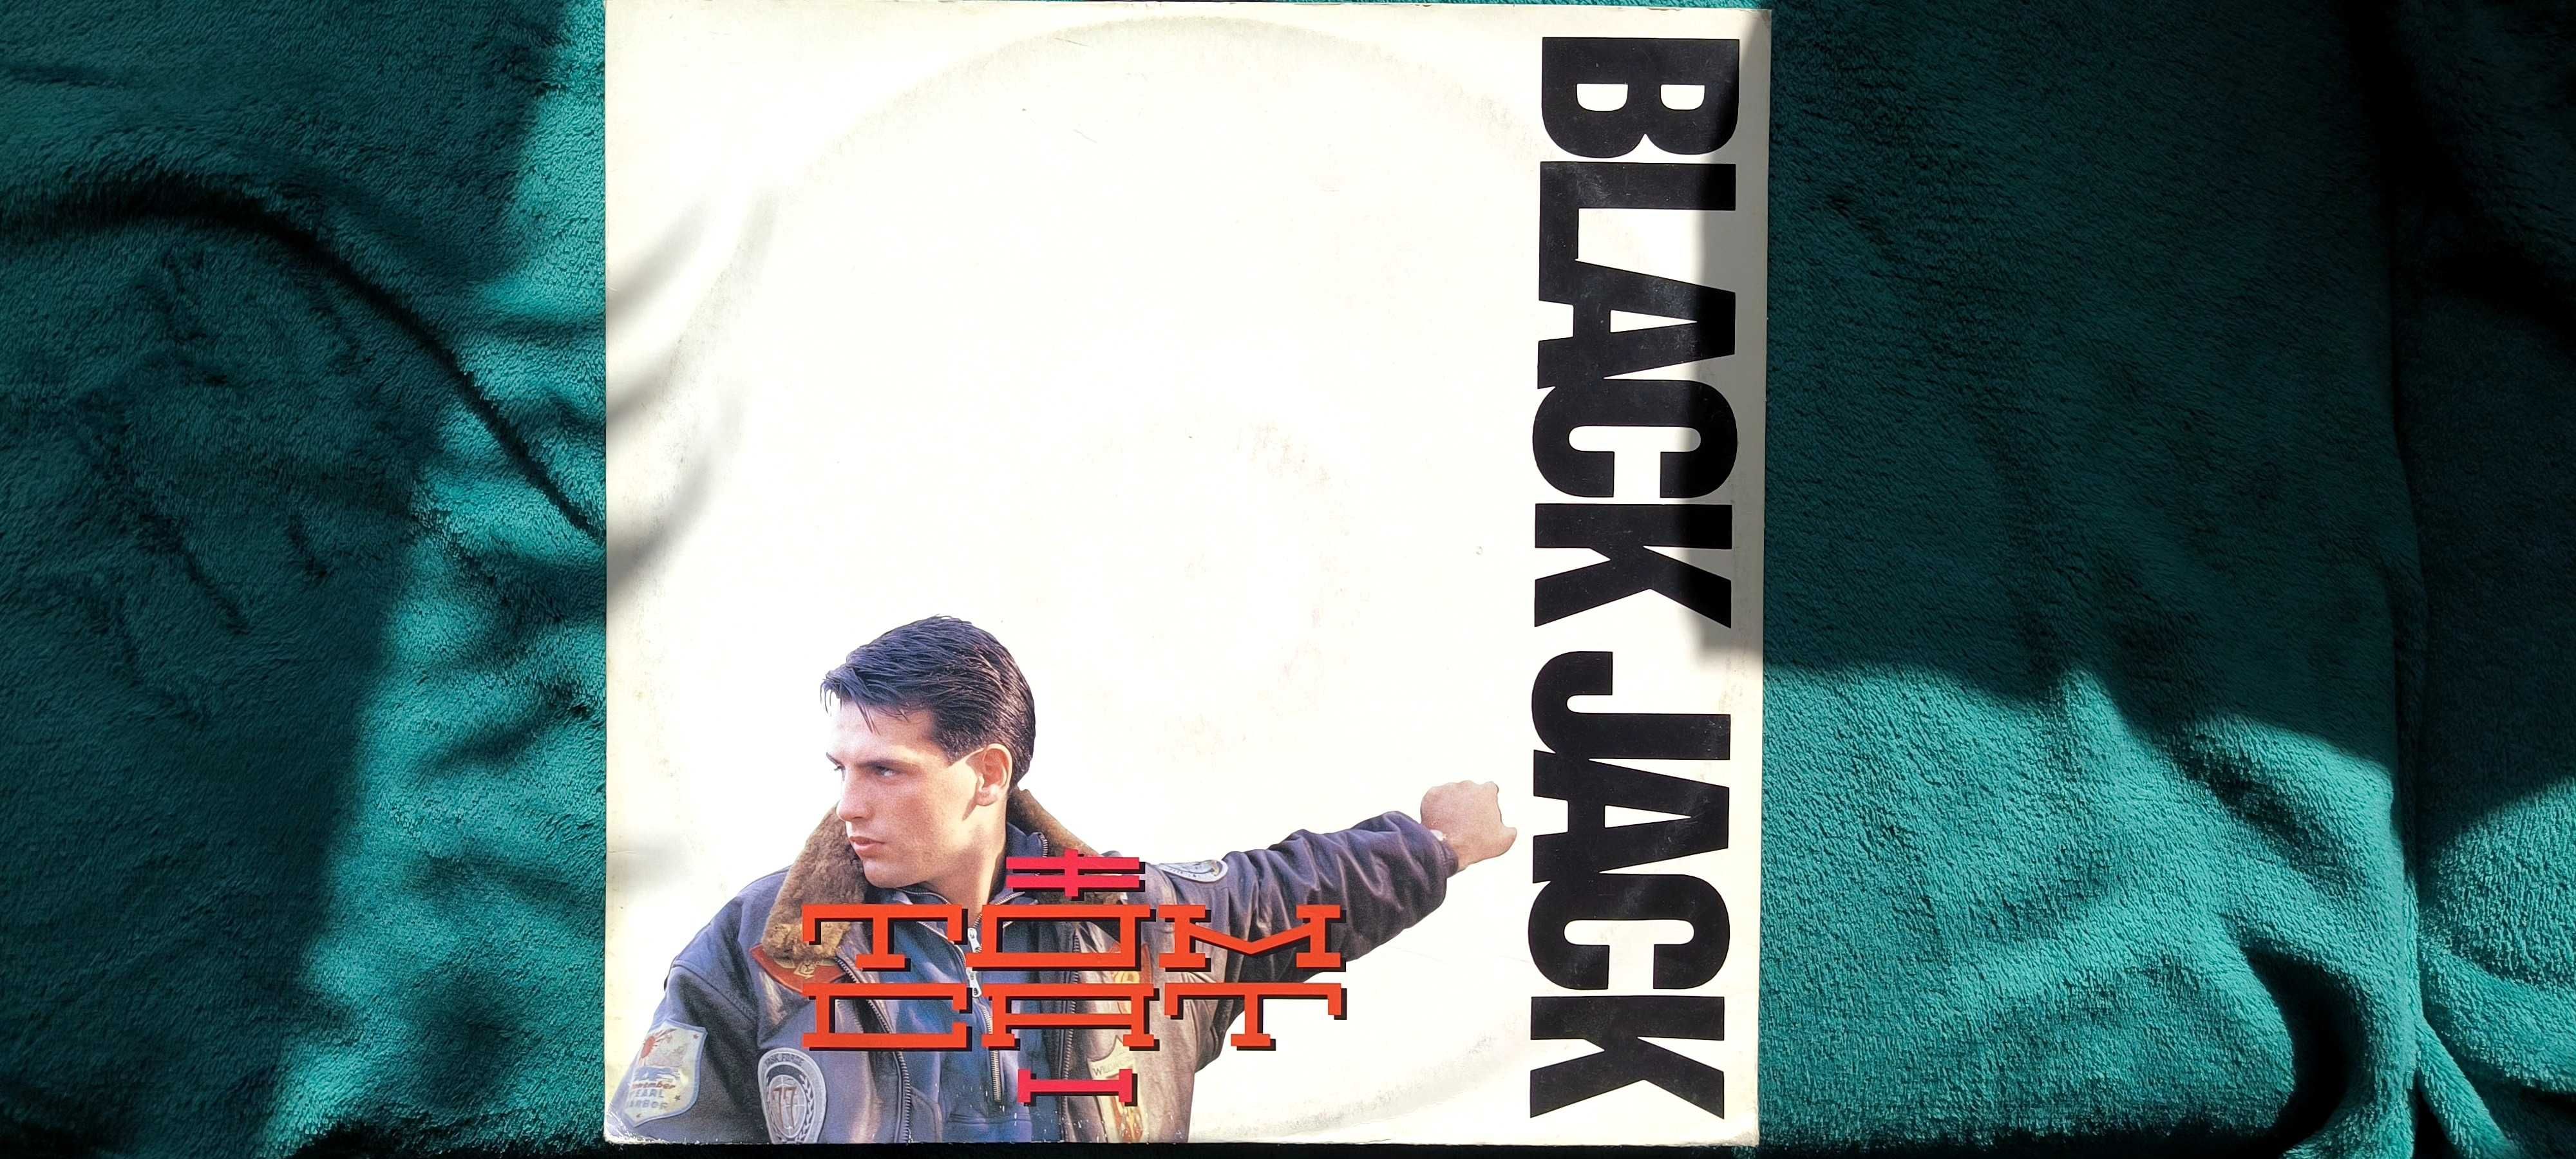 Płyta winylowa Black jack